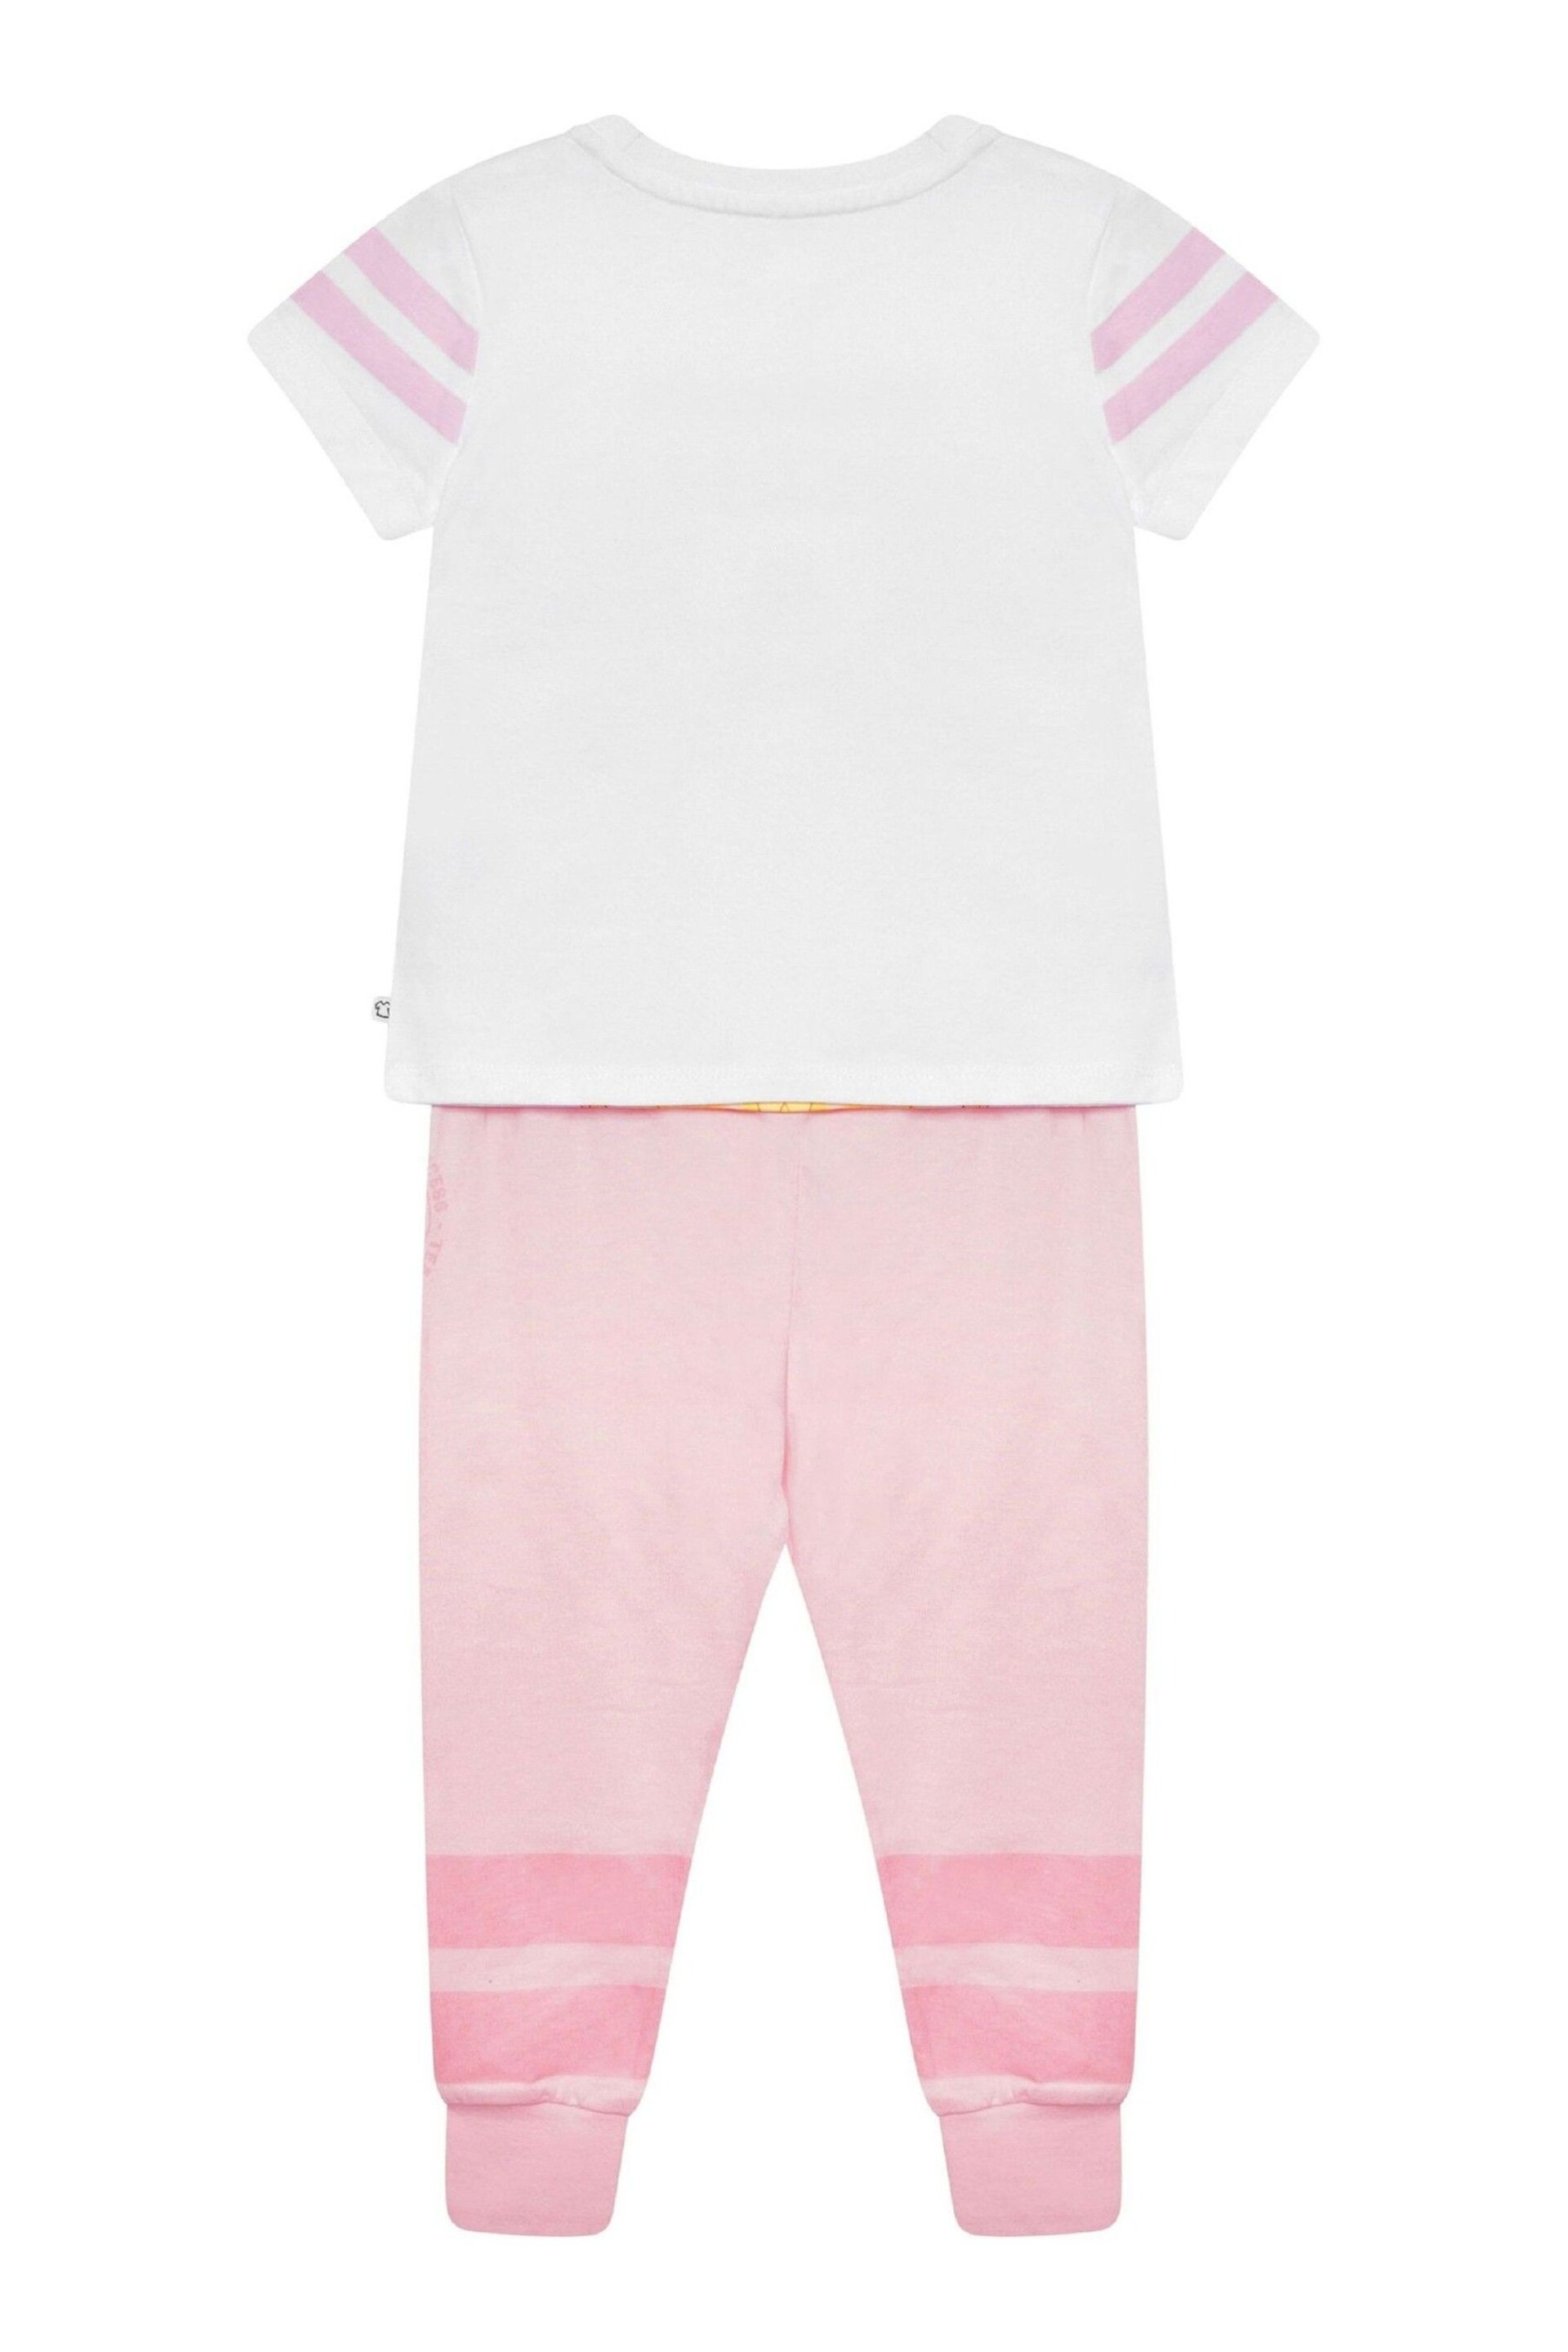 Brand Threads Pink Disney Princces Girls Pyjama Set - Image 5 of 5